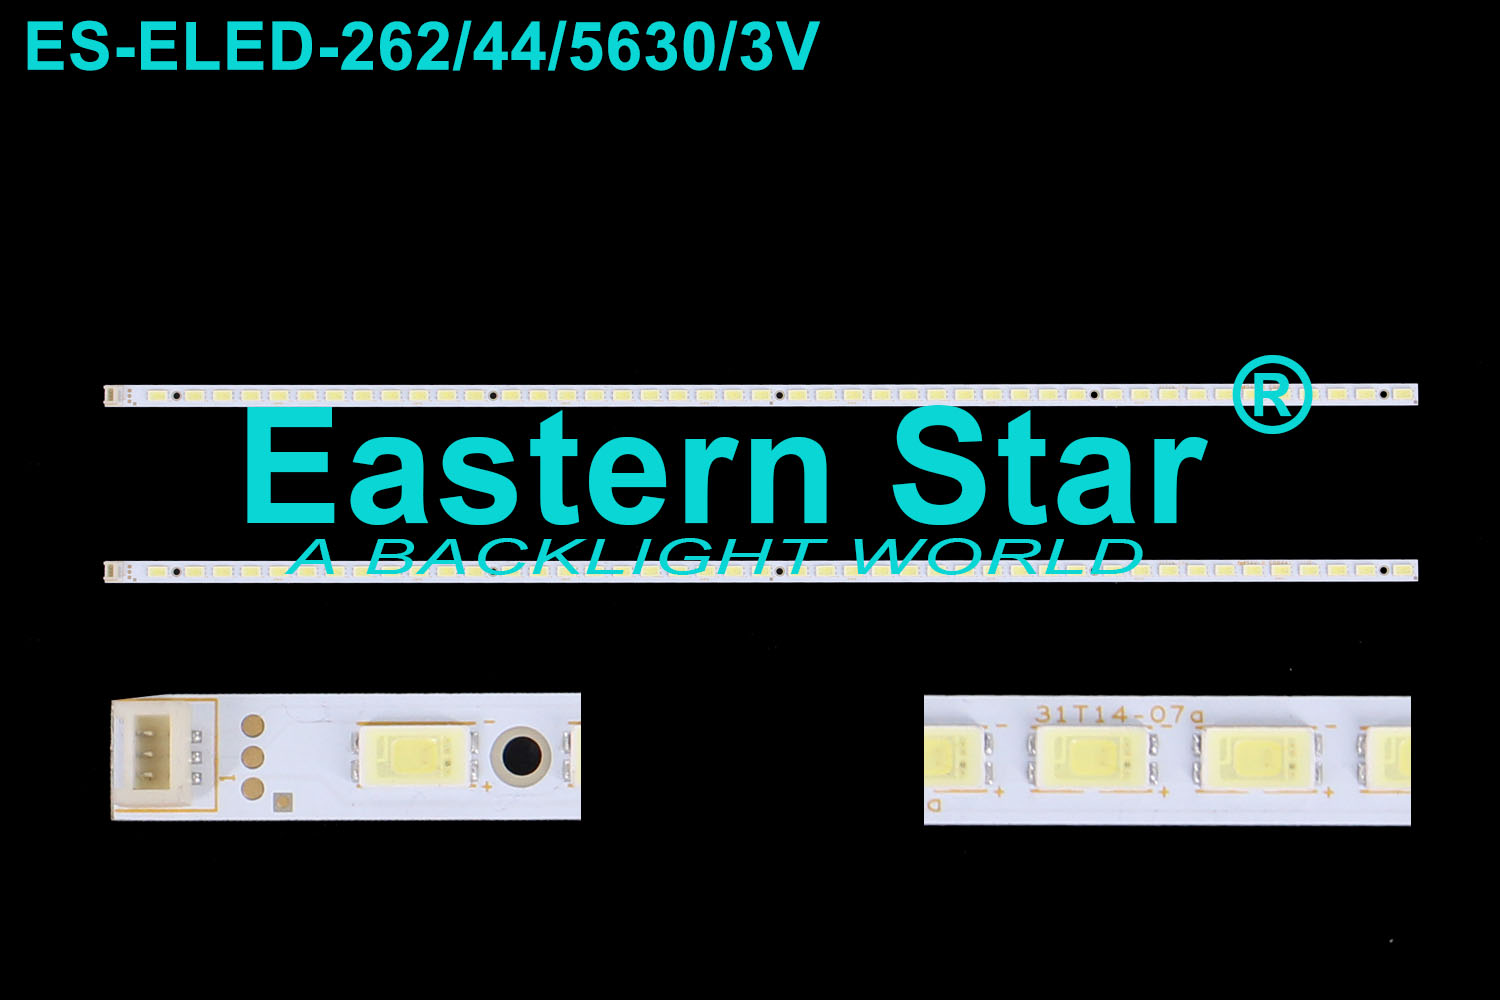 ES-ELED-262 ELED/EDGE TV backlight use for Haier 32" 44LEDs backlight strips 31T14-07A LE32A700P LED STRIPS(2)